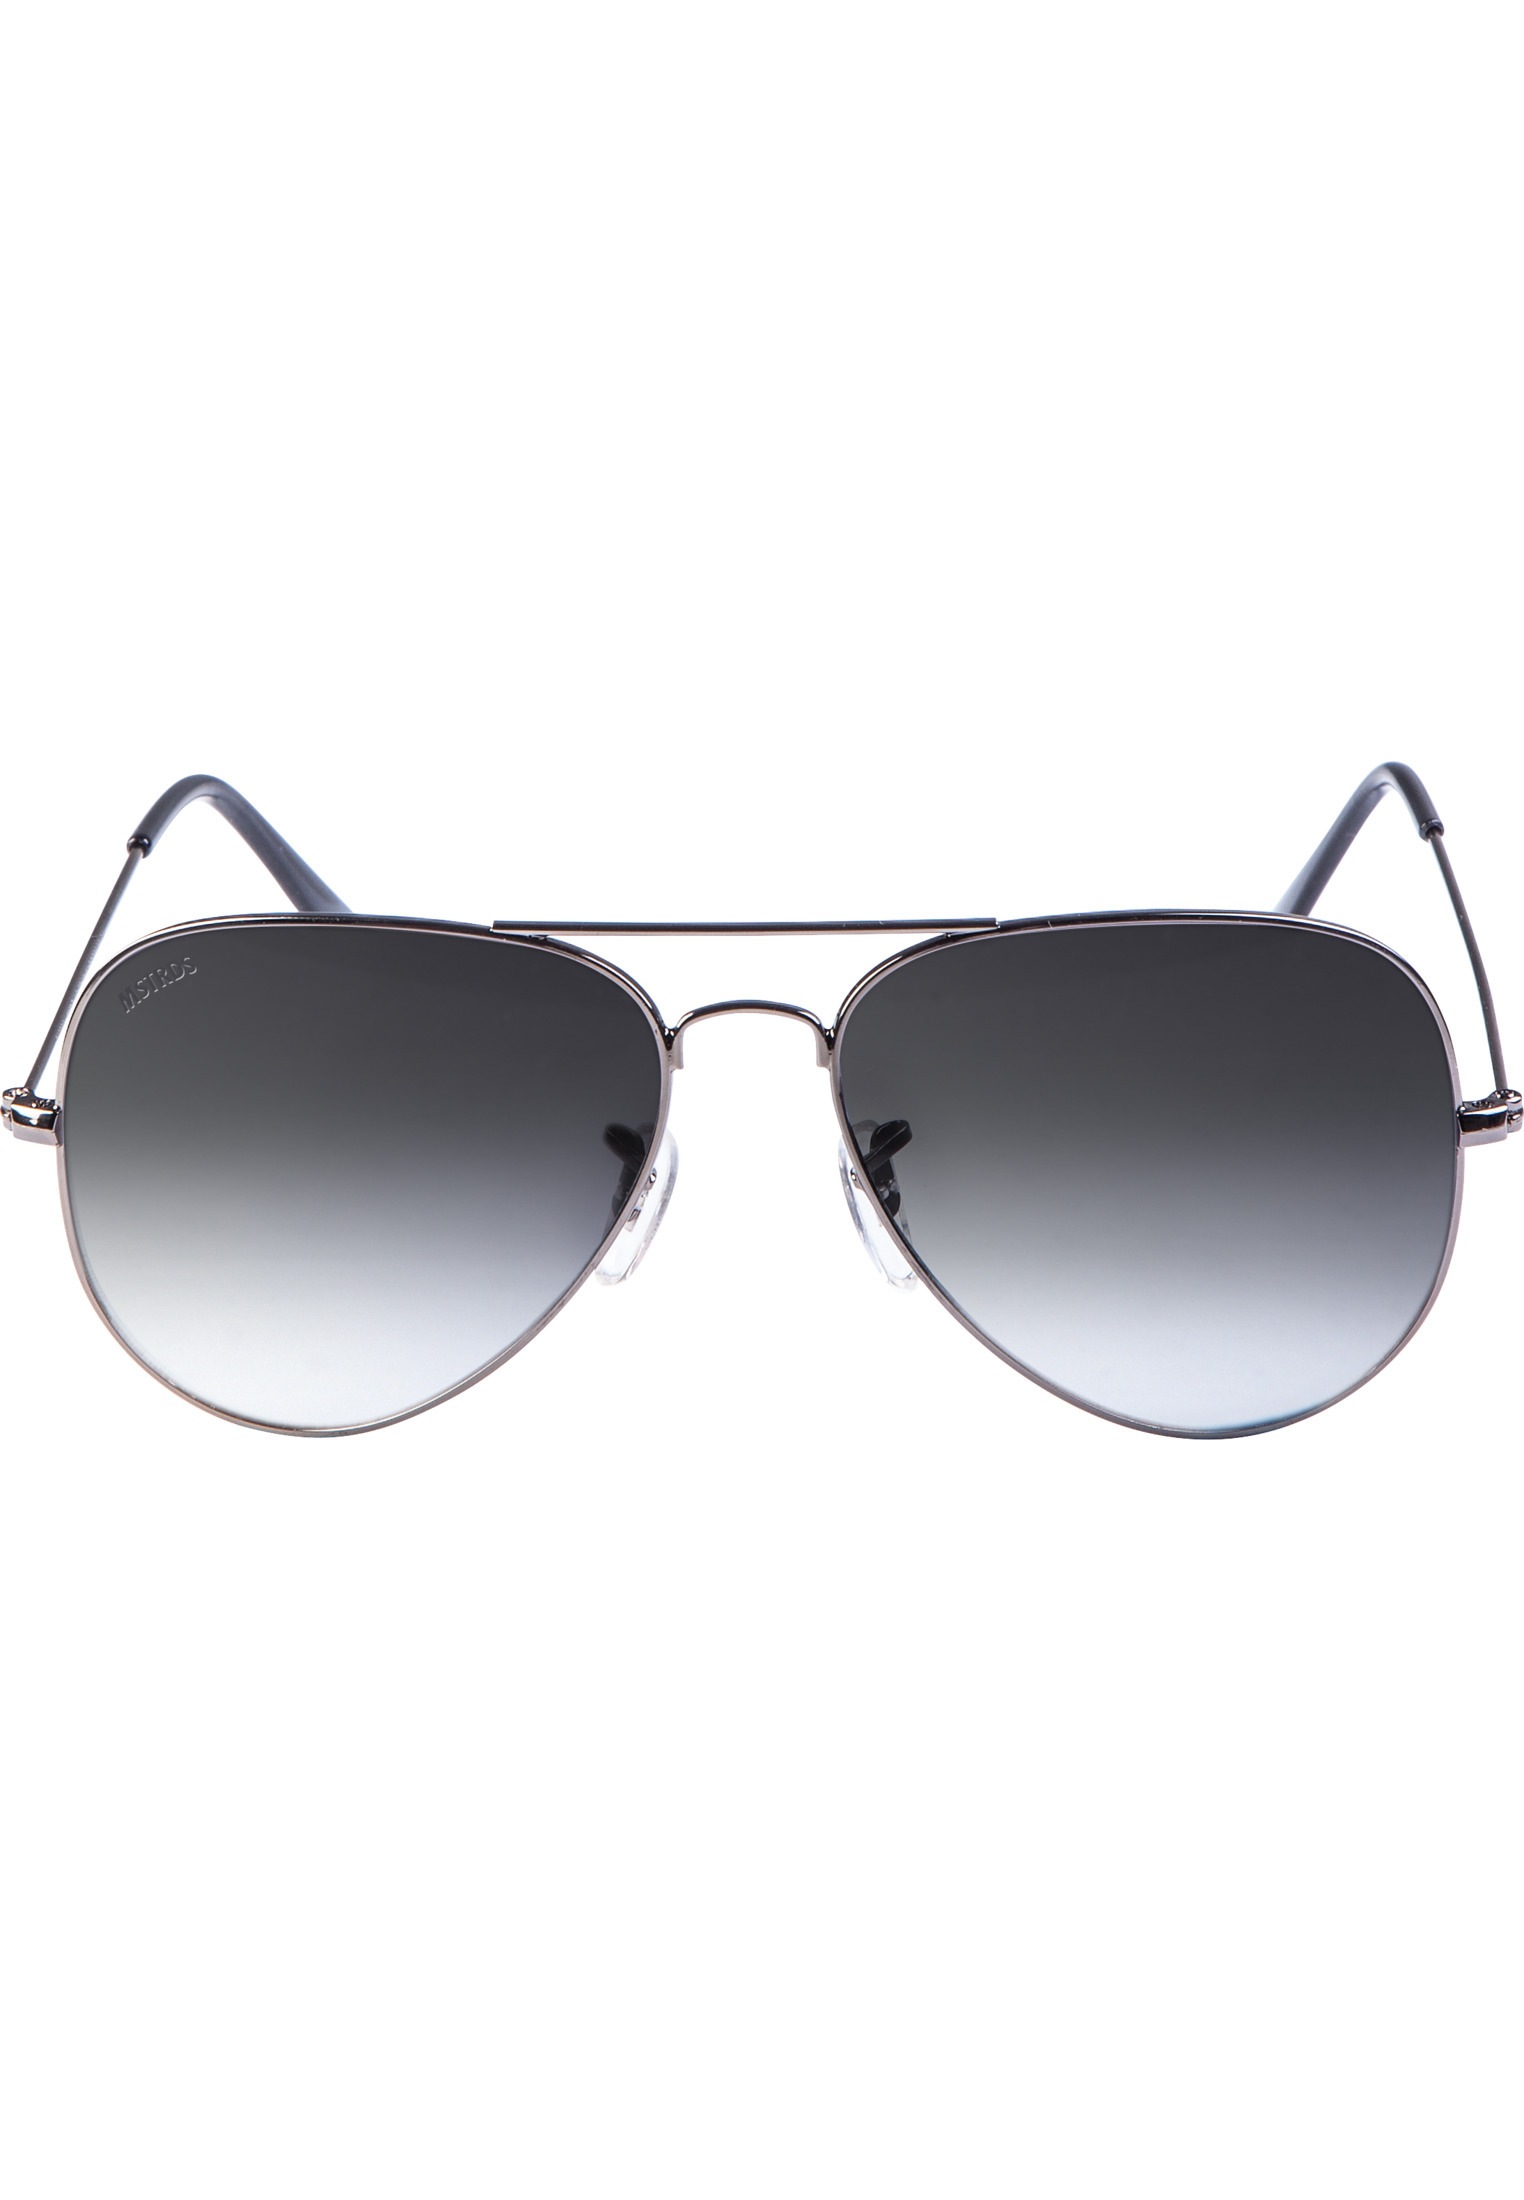 MSTRDS Sonnenbrille kaufen »Accessoires online | Sunglasses BAUR PureAv«